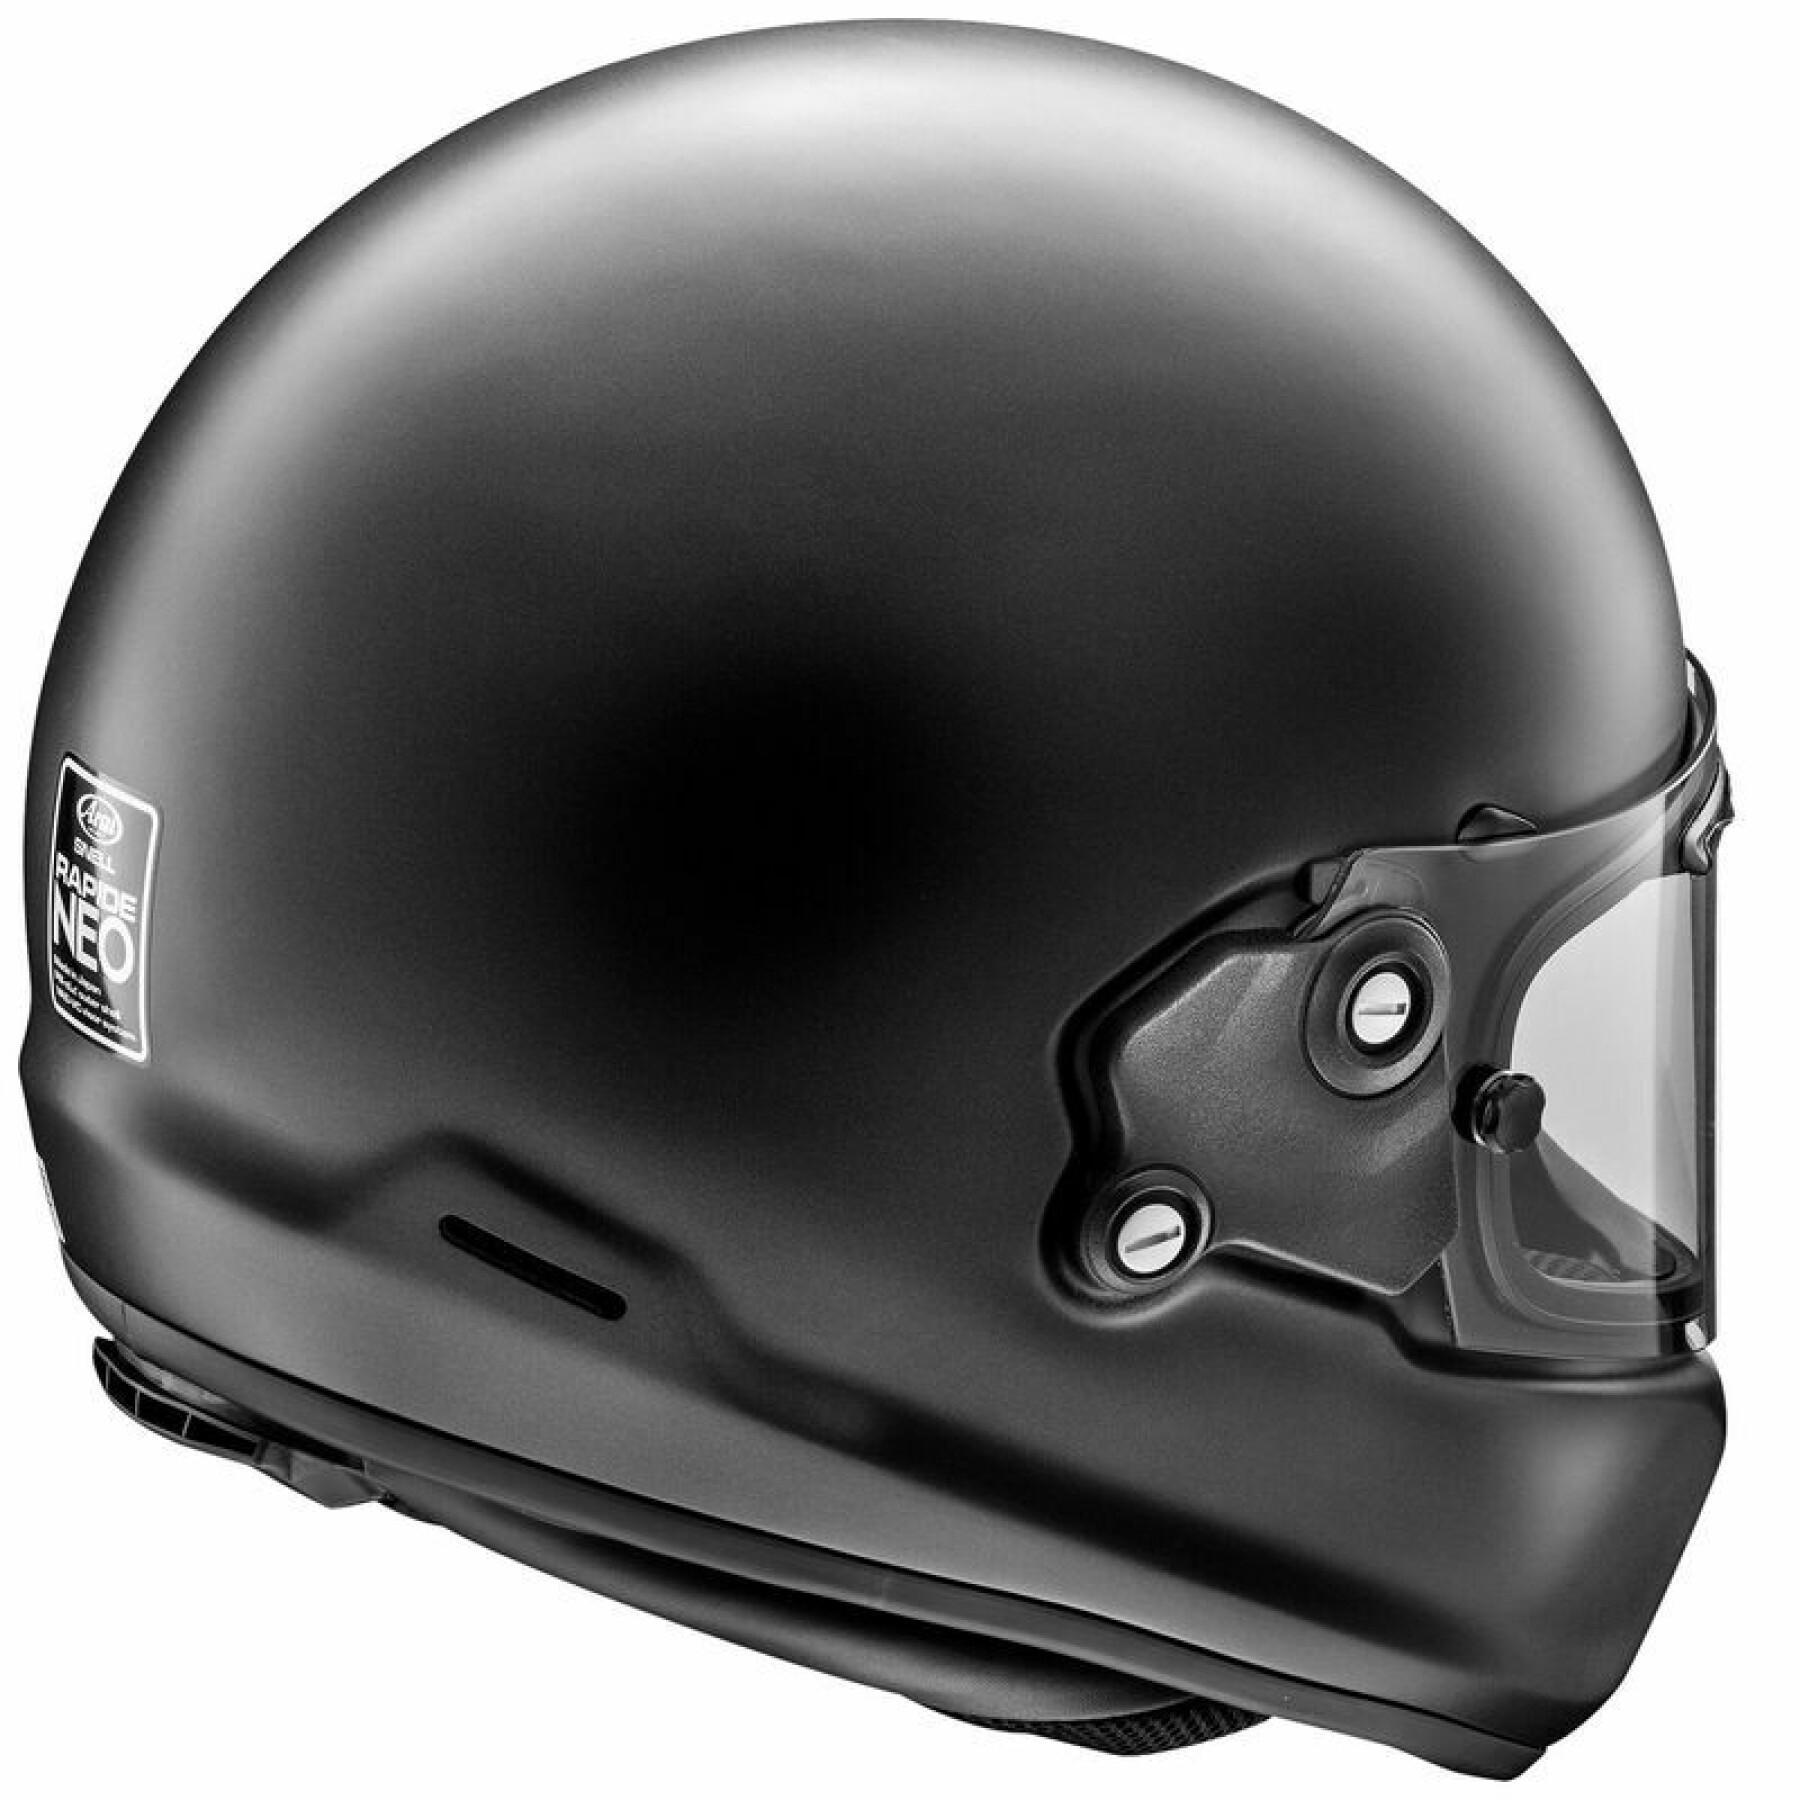 Full face motorcycle helmet Arai Concept-X